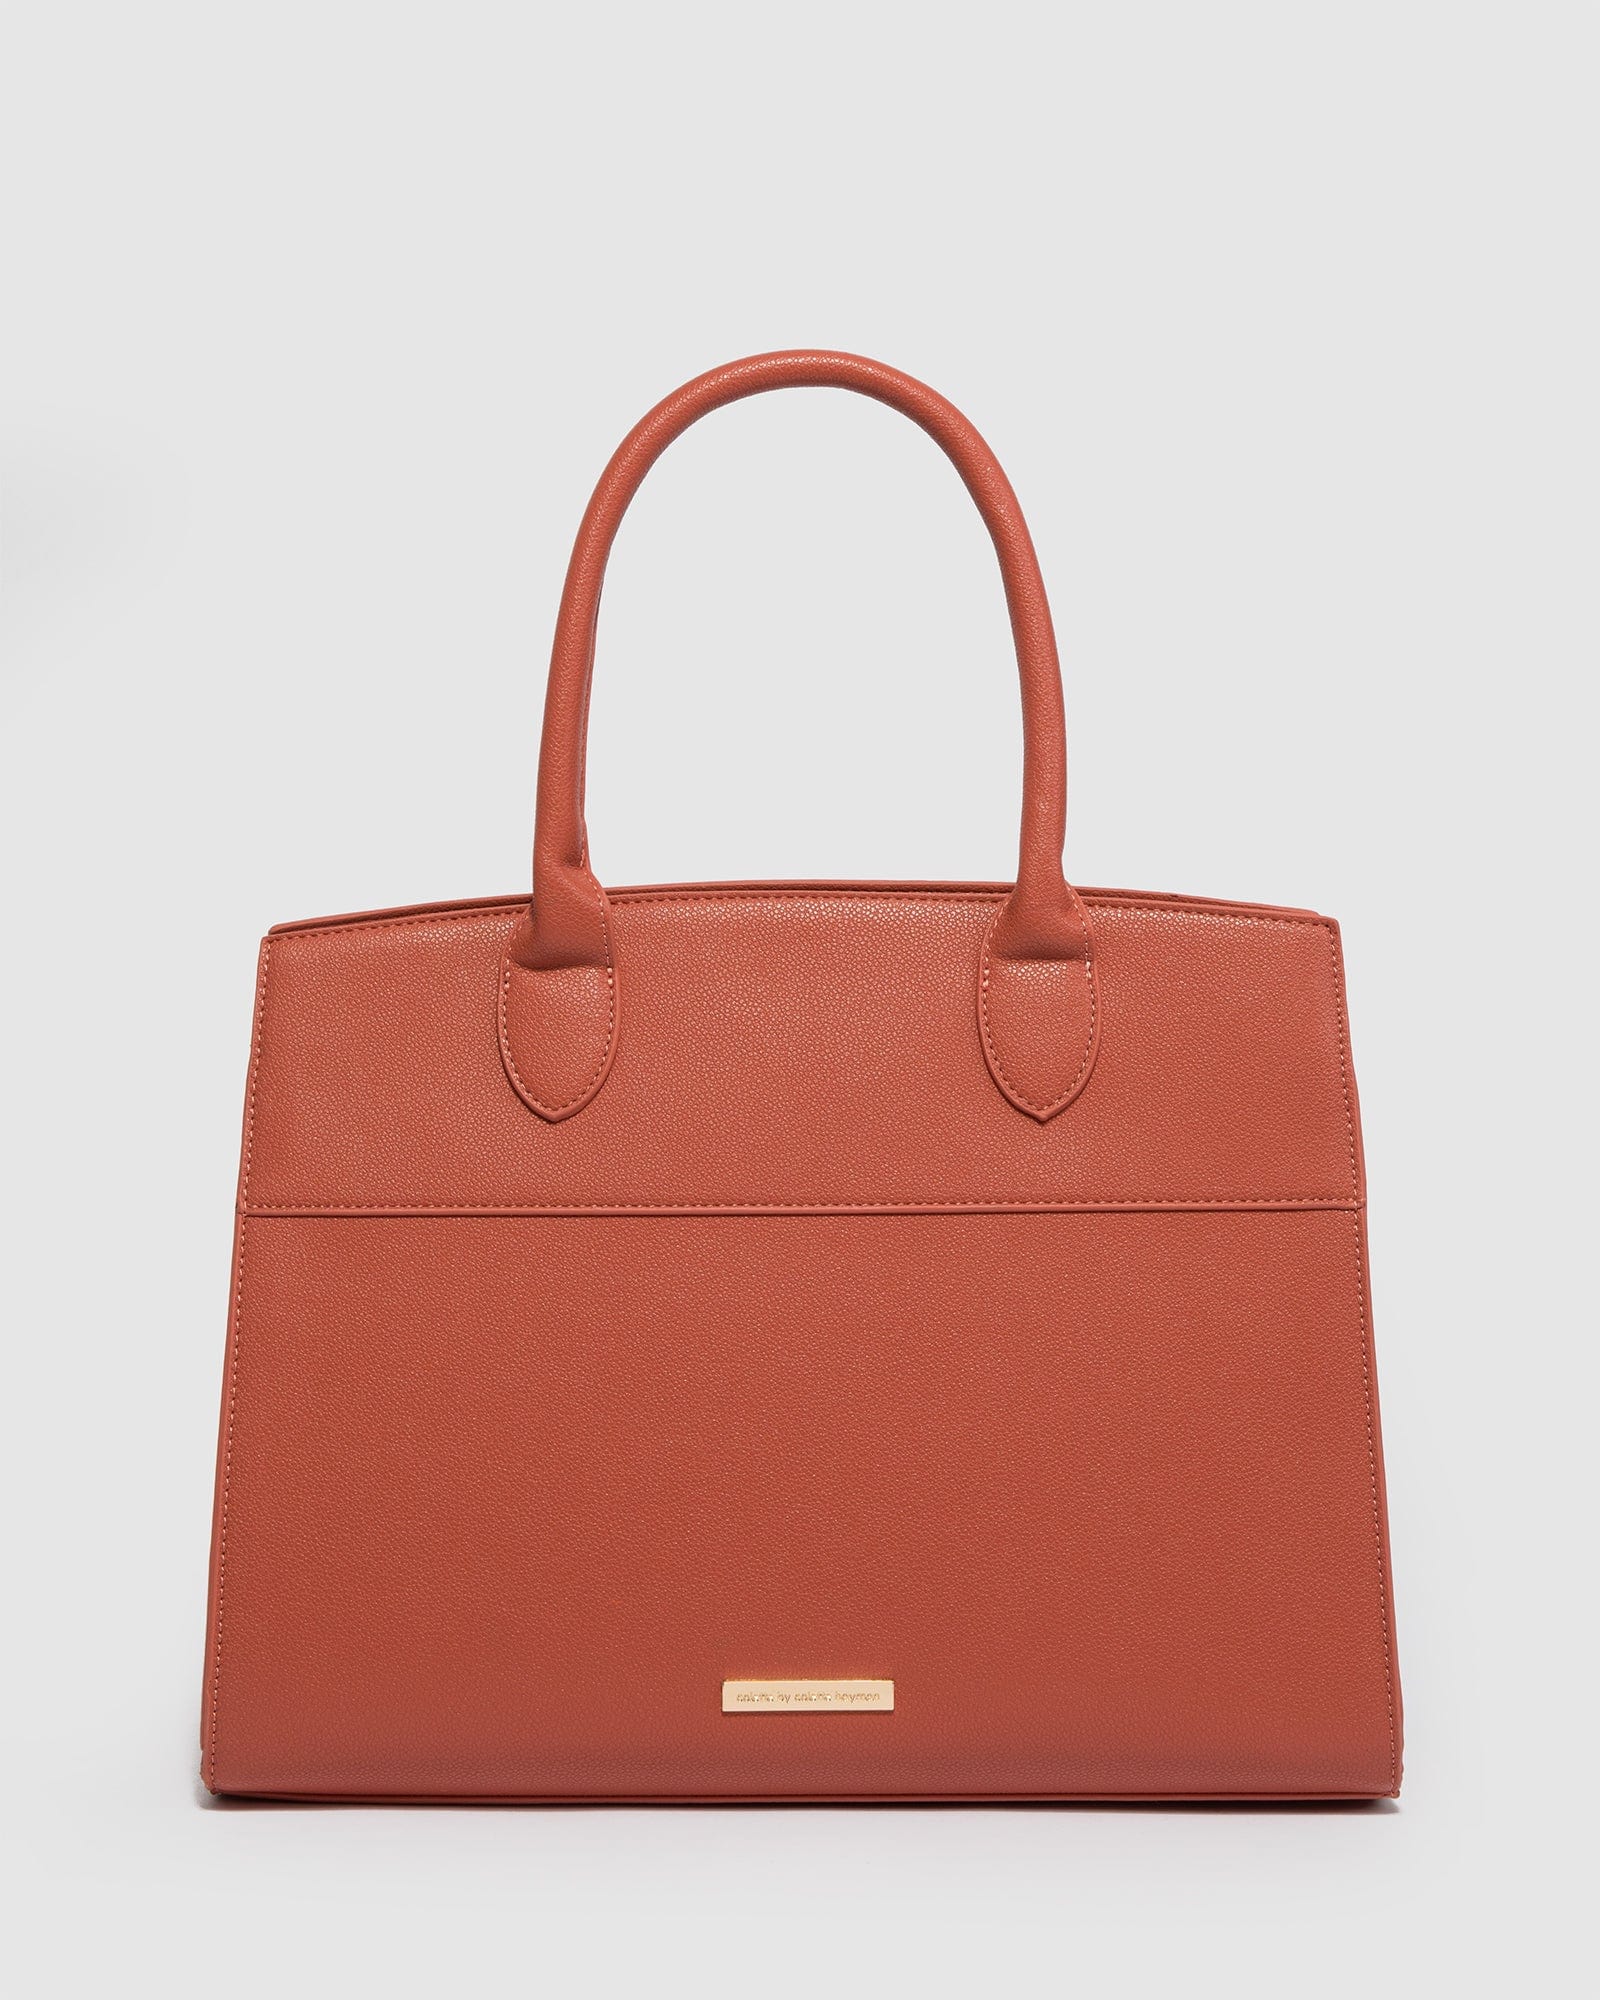 TOUT Handbags - Genuine Leather Bags & Accessories | Purses for sale, Purses  and handbags, Cheap purses